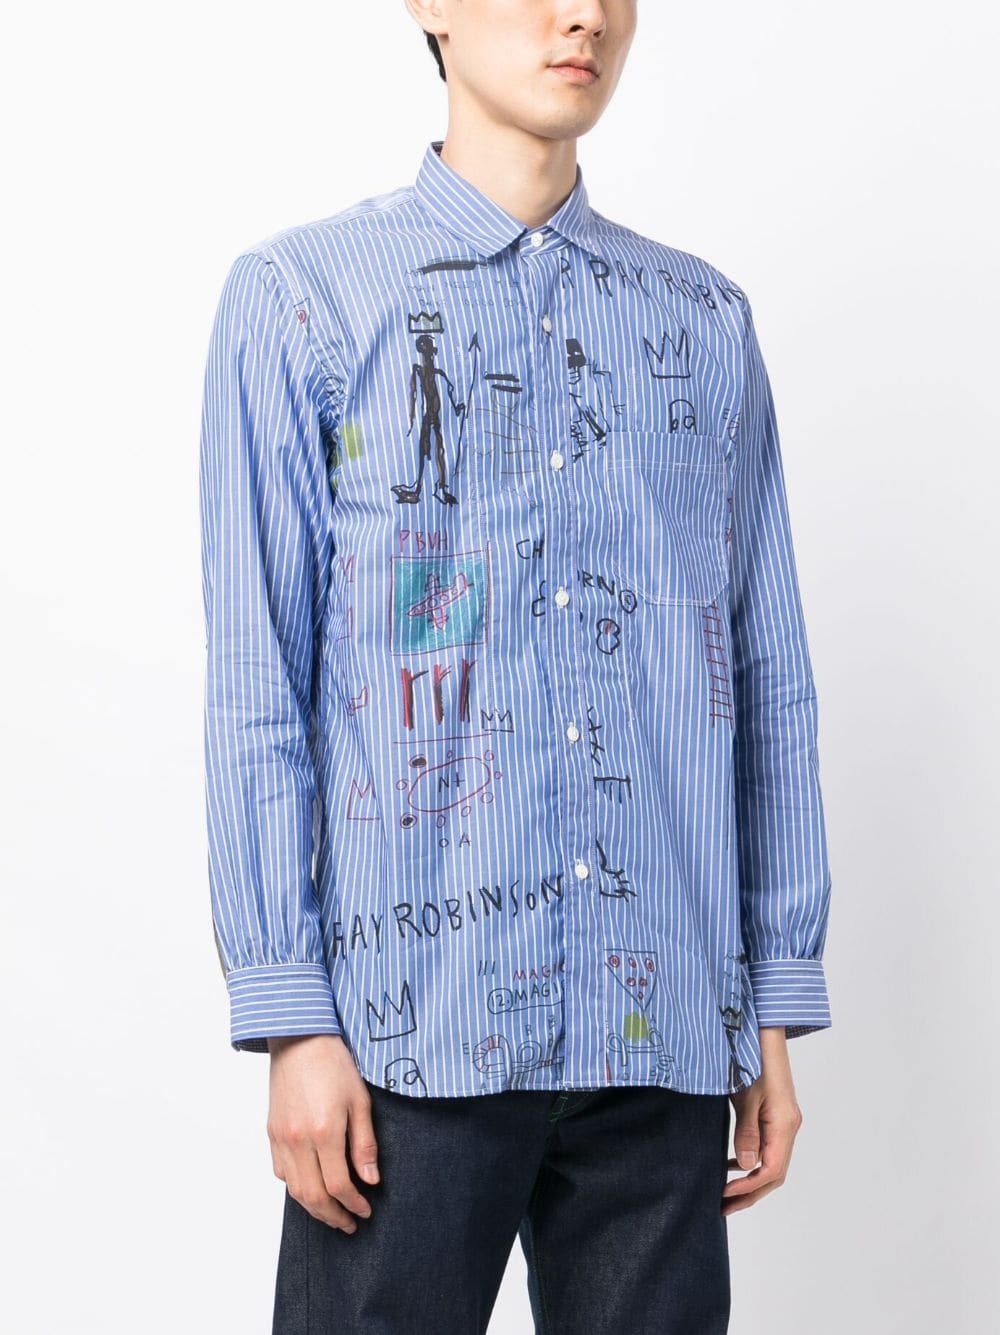 Junya Watanabe MAN Basquiat-inspired print shirt | REVERSIBLE